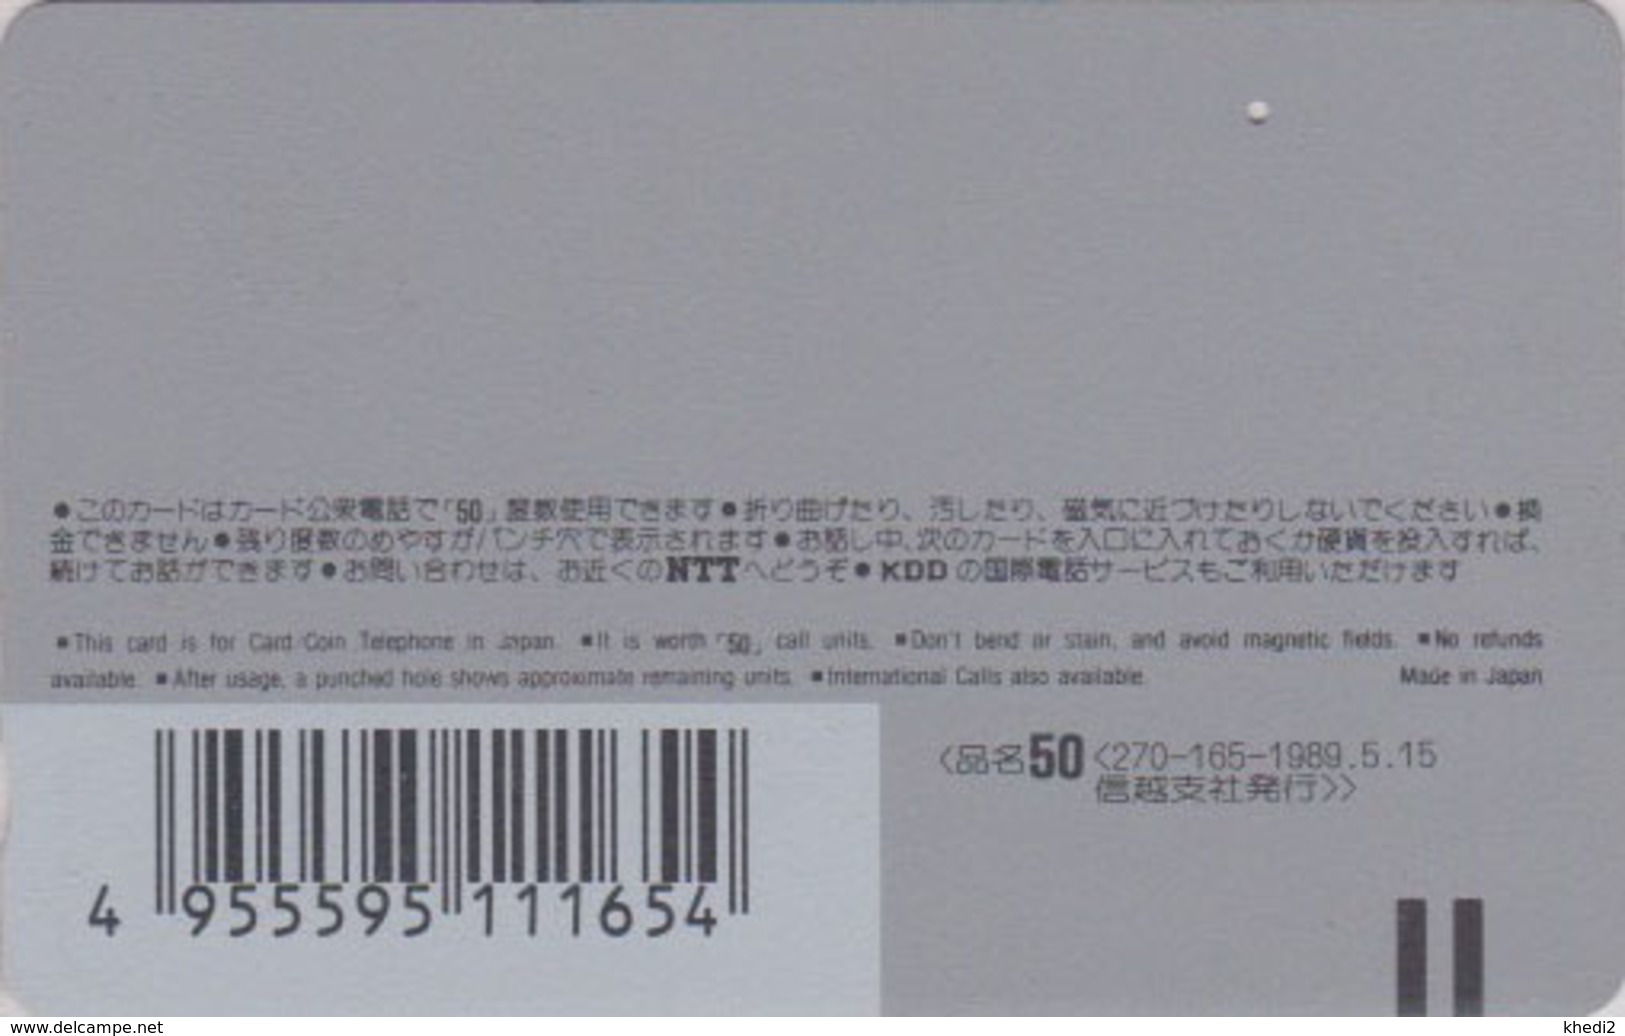 Télécarte Japon / NTT 270-165 A ** ONE PUNCH ** - Animal - OISEAU Fauvette Japonaise - ZOSTEROPS BIRD Japan Phonecard - Sperlingsvögel & Singvögel